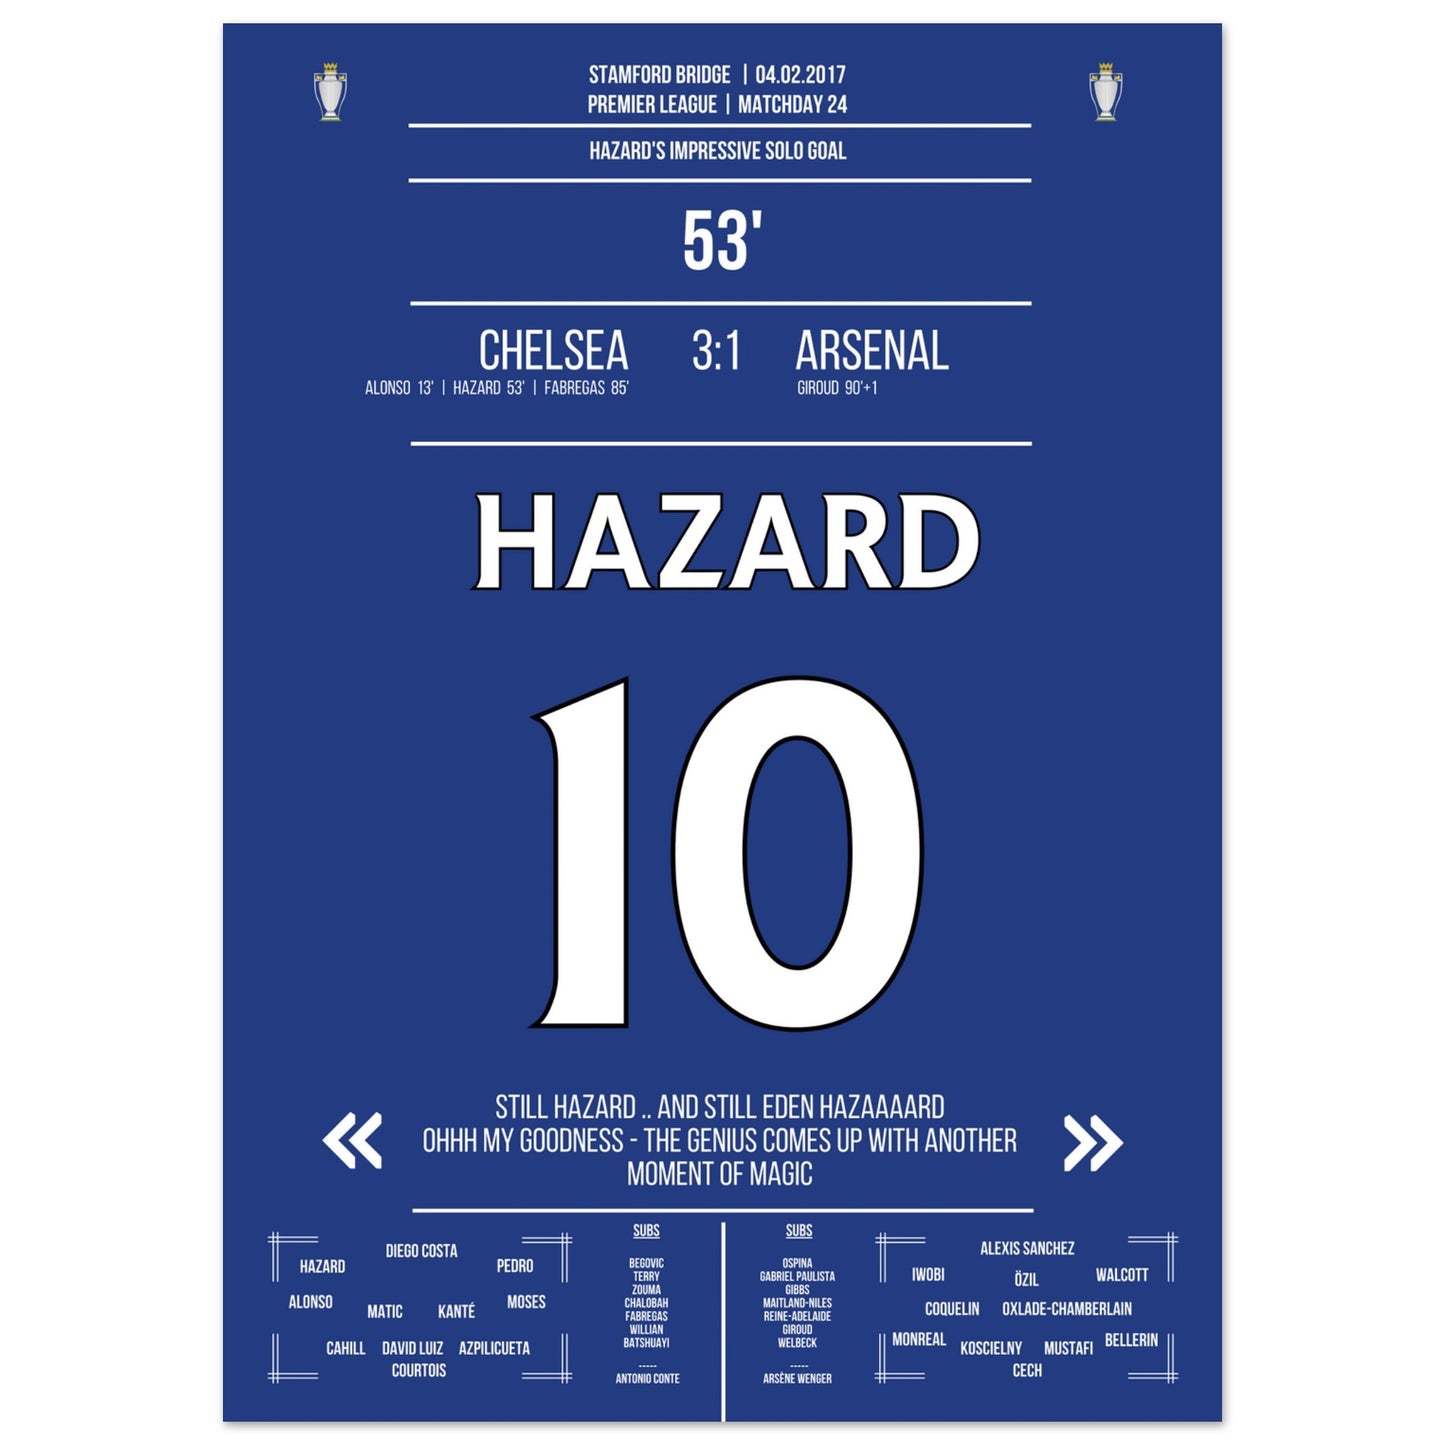 Hazard's Weltklasse-Solo gegen Arsenal in 2017